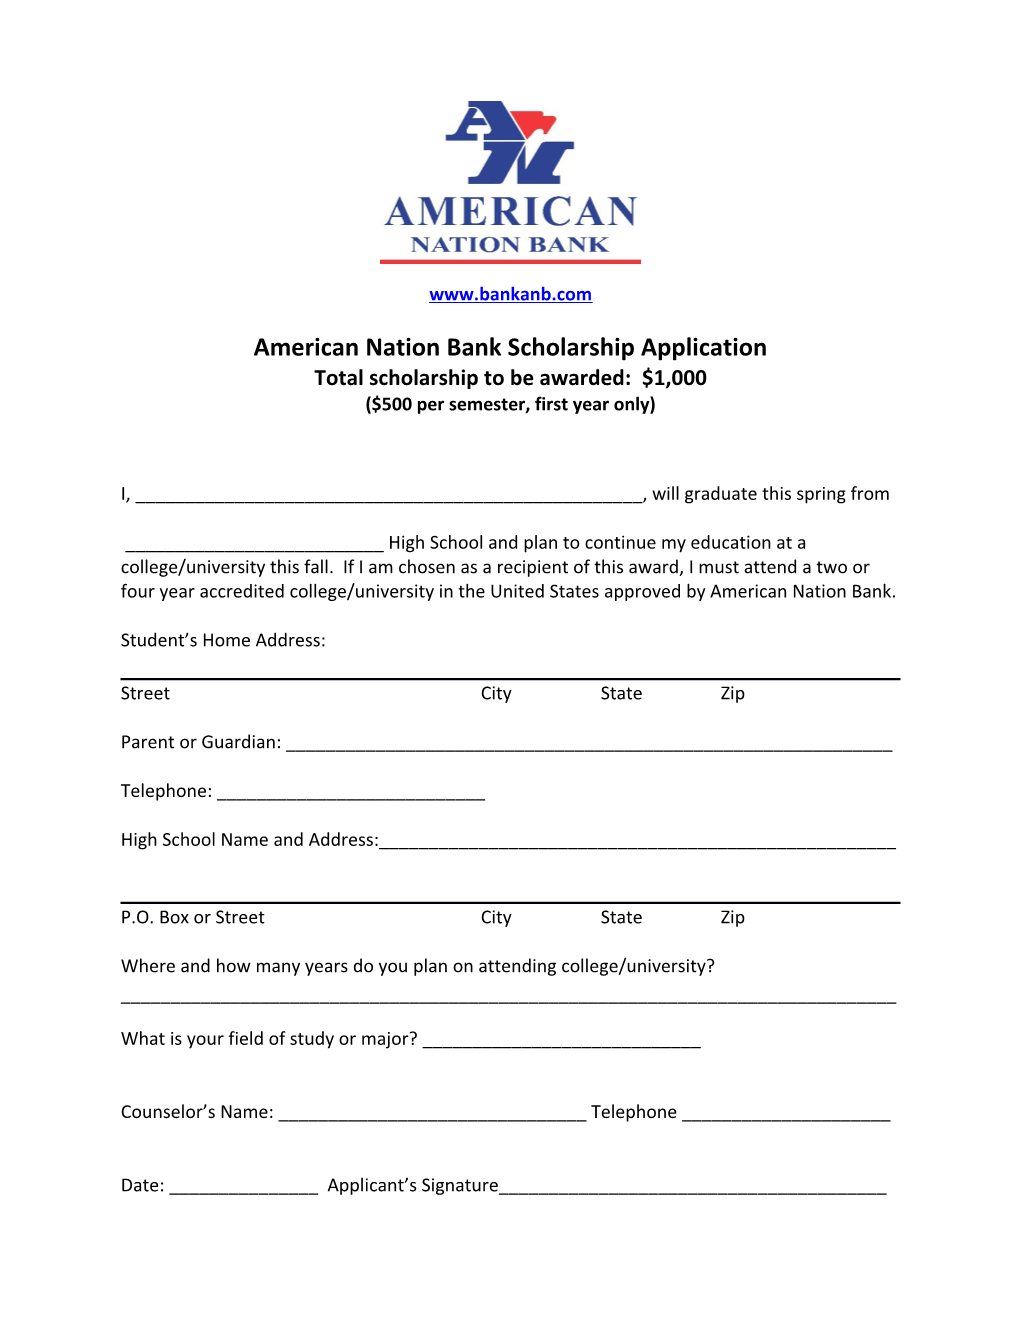 American Nation Bank Scholarship Application